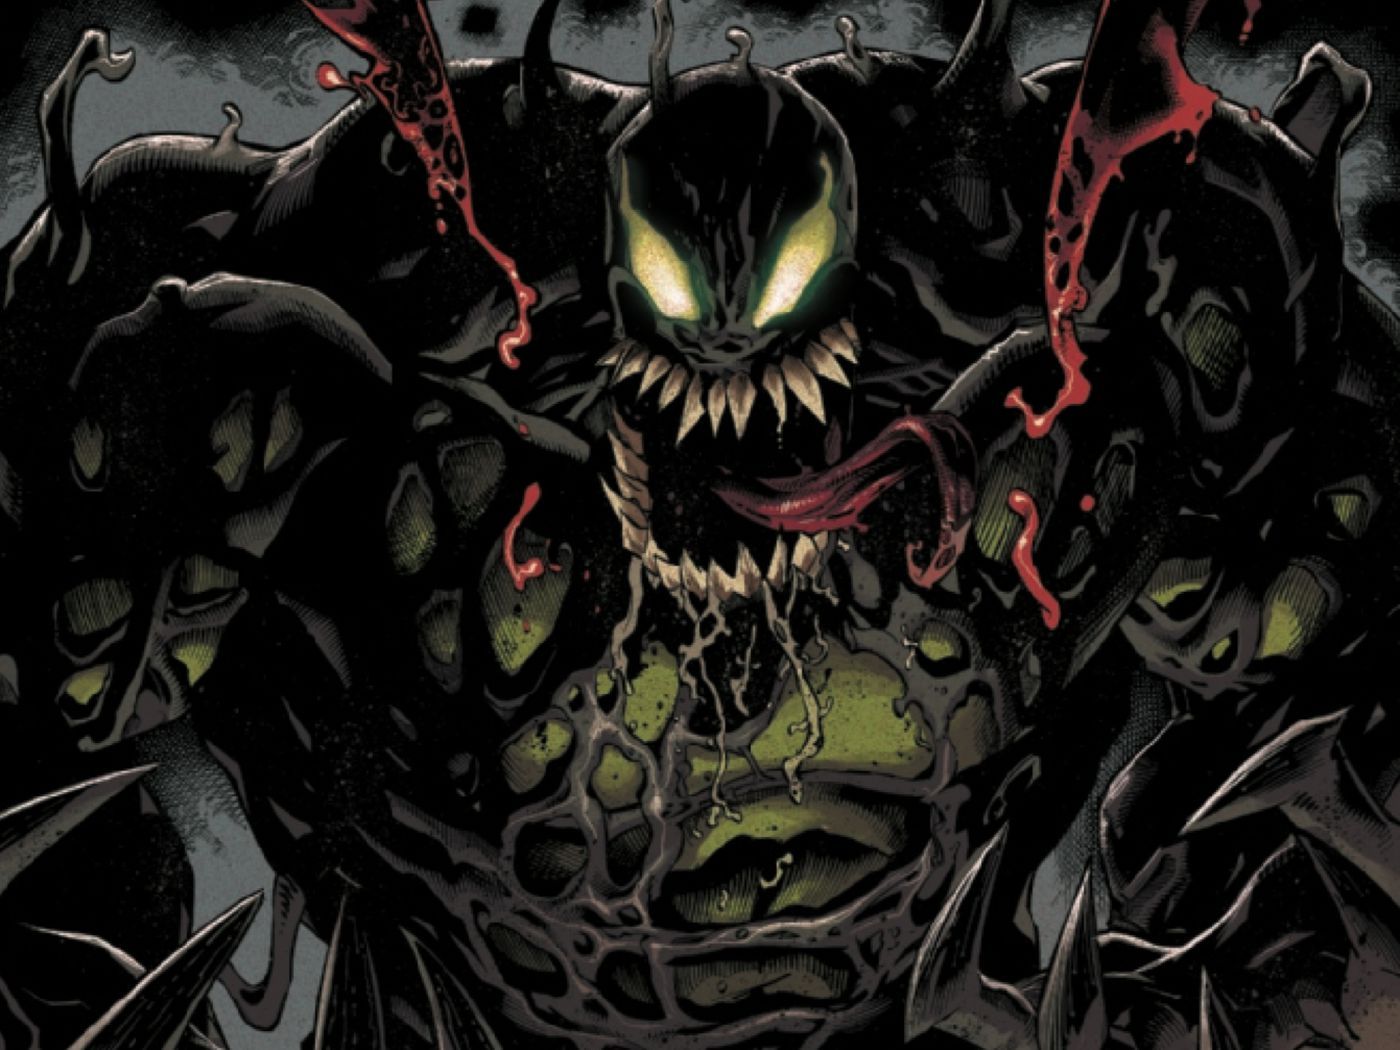 Marvel's Absolute Carnage series has the Hulk merge with Venom